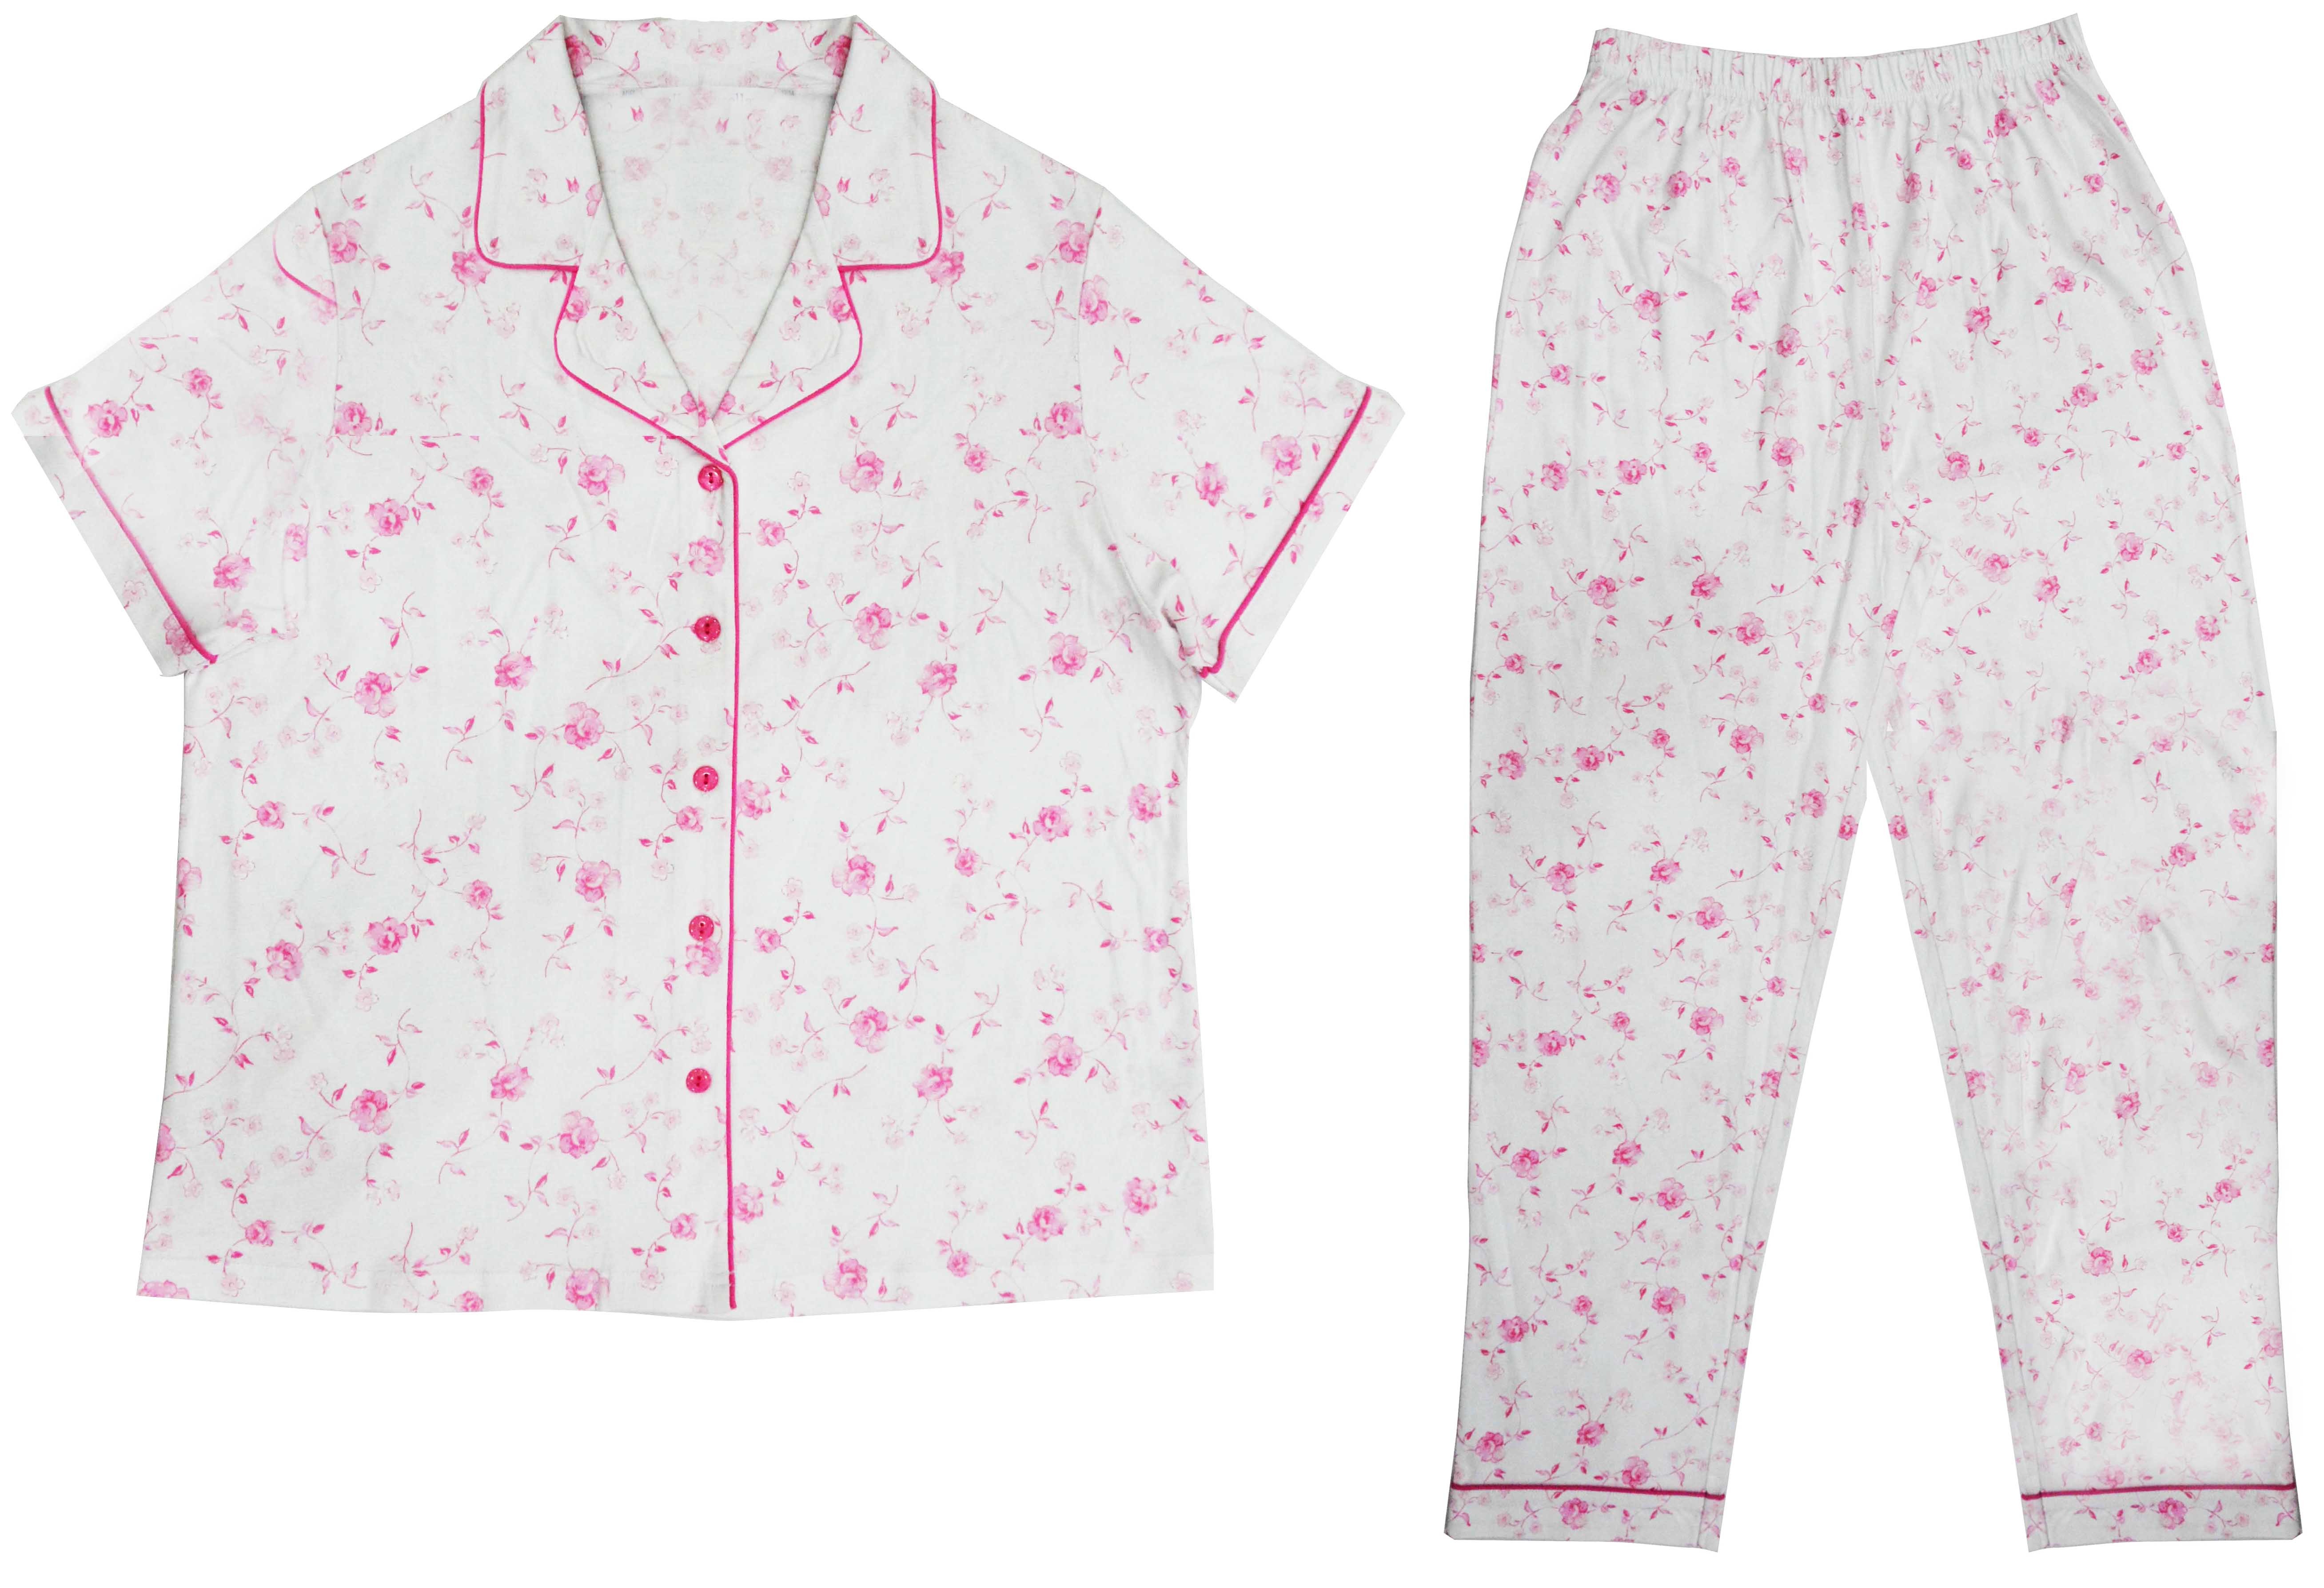 Wholesale Basic Style Women'S Sleepwear Shorts Sets , Women'S Cotton Sleep Shorts OEM from china suppliers